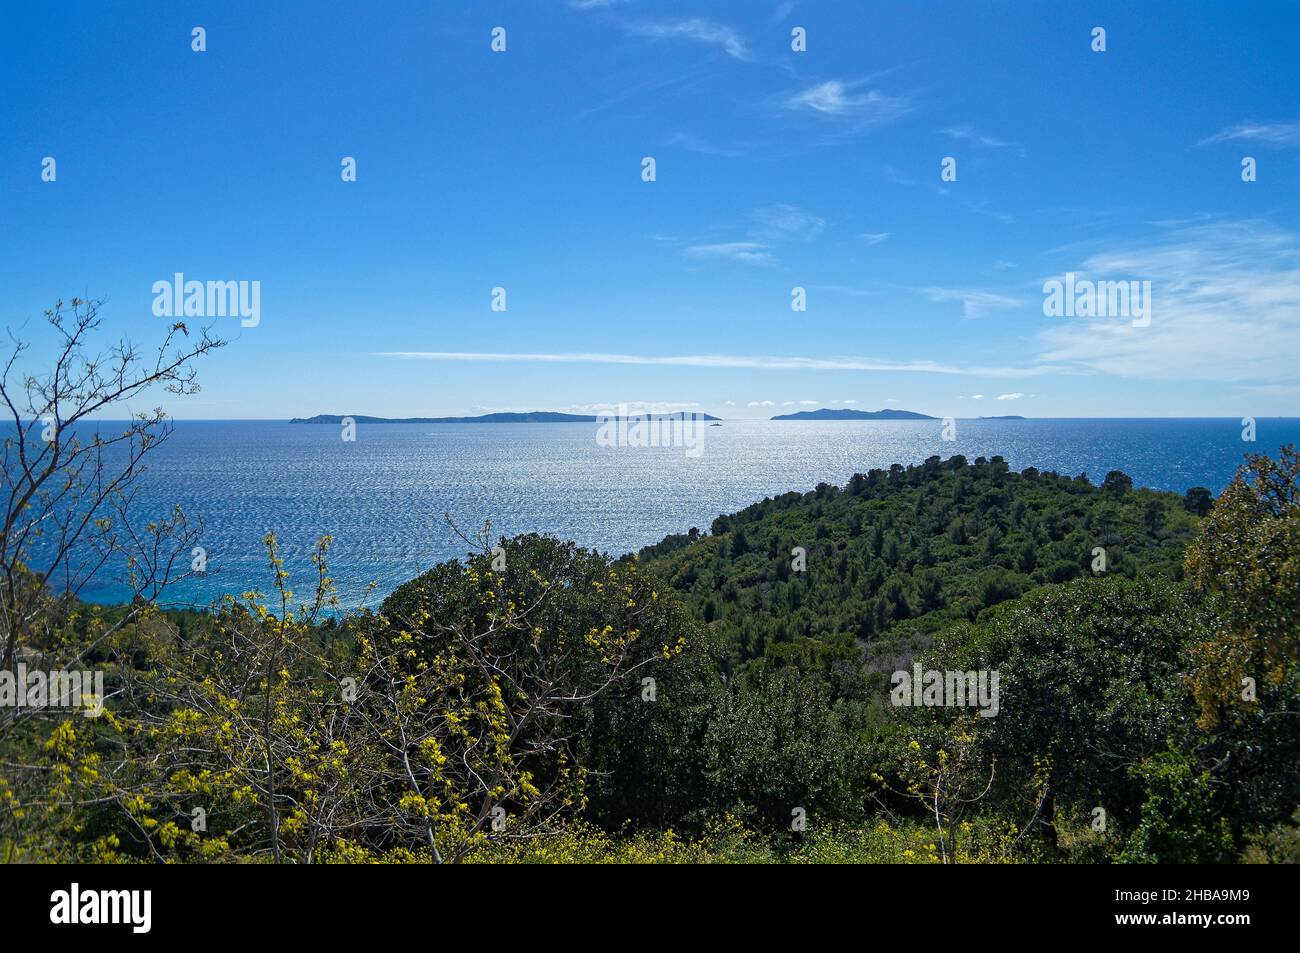 3 'iles d'or' (Levant, Port-Cros, Porquerolles) in French Riviera Stock Photo